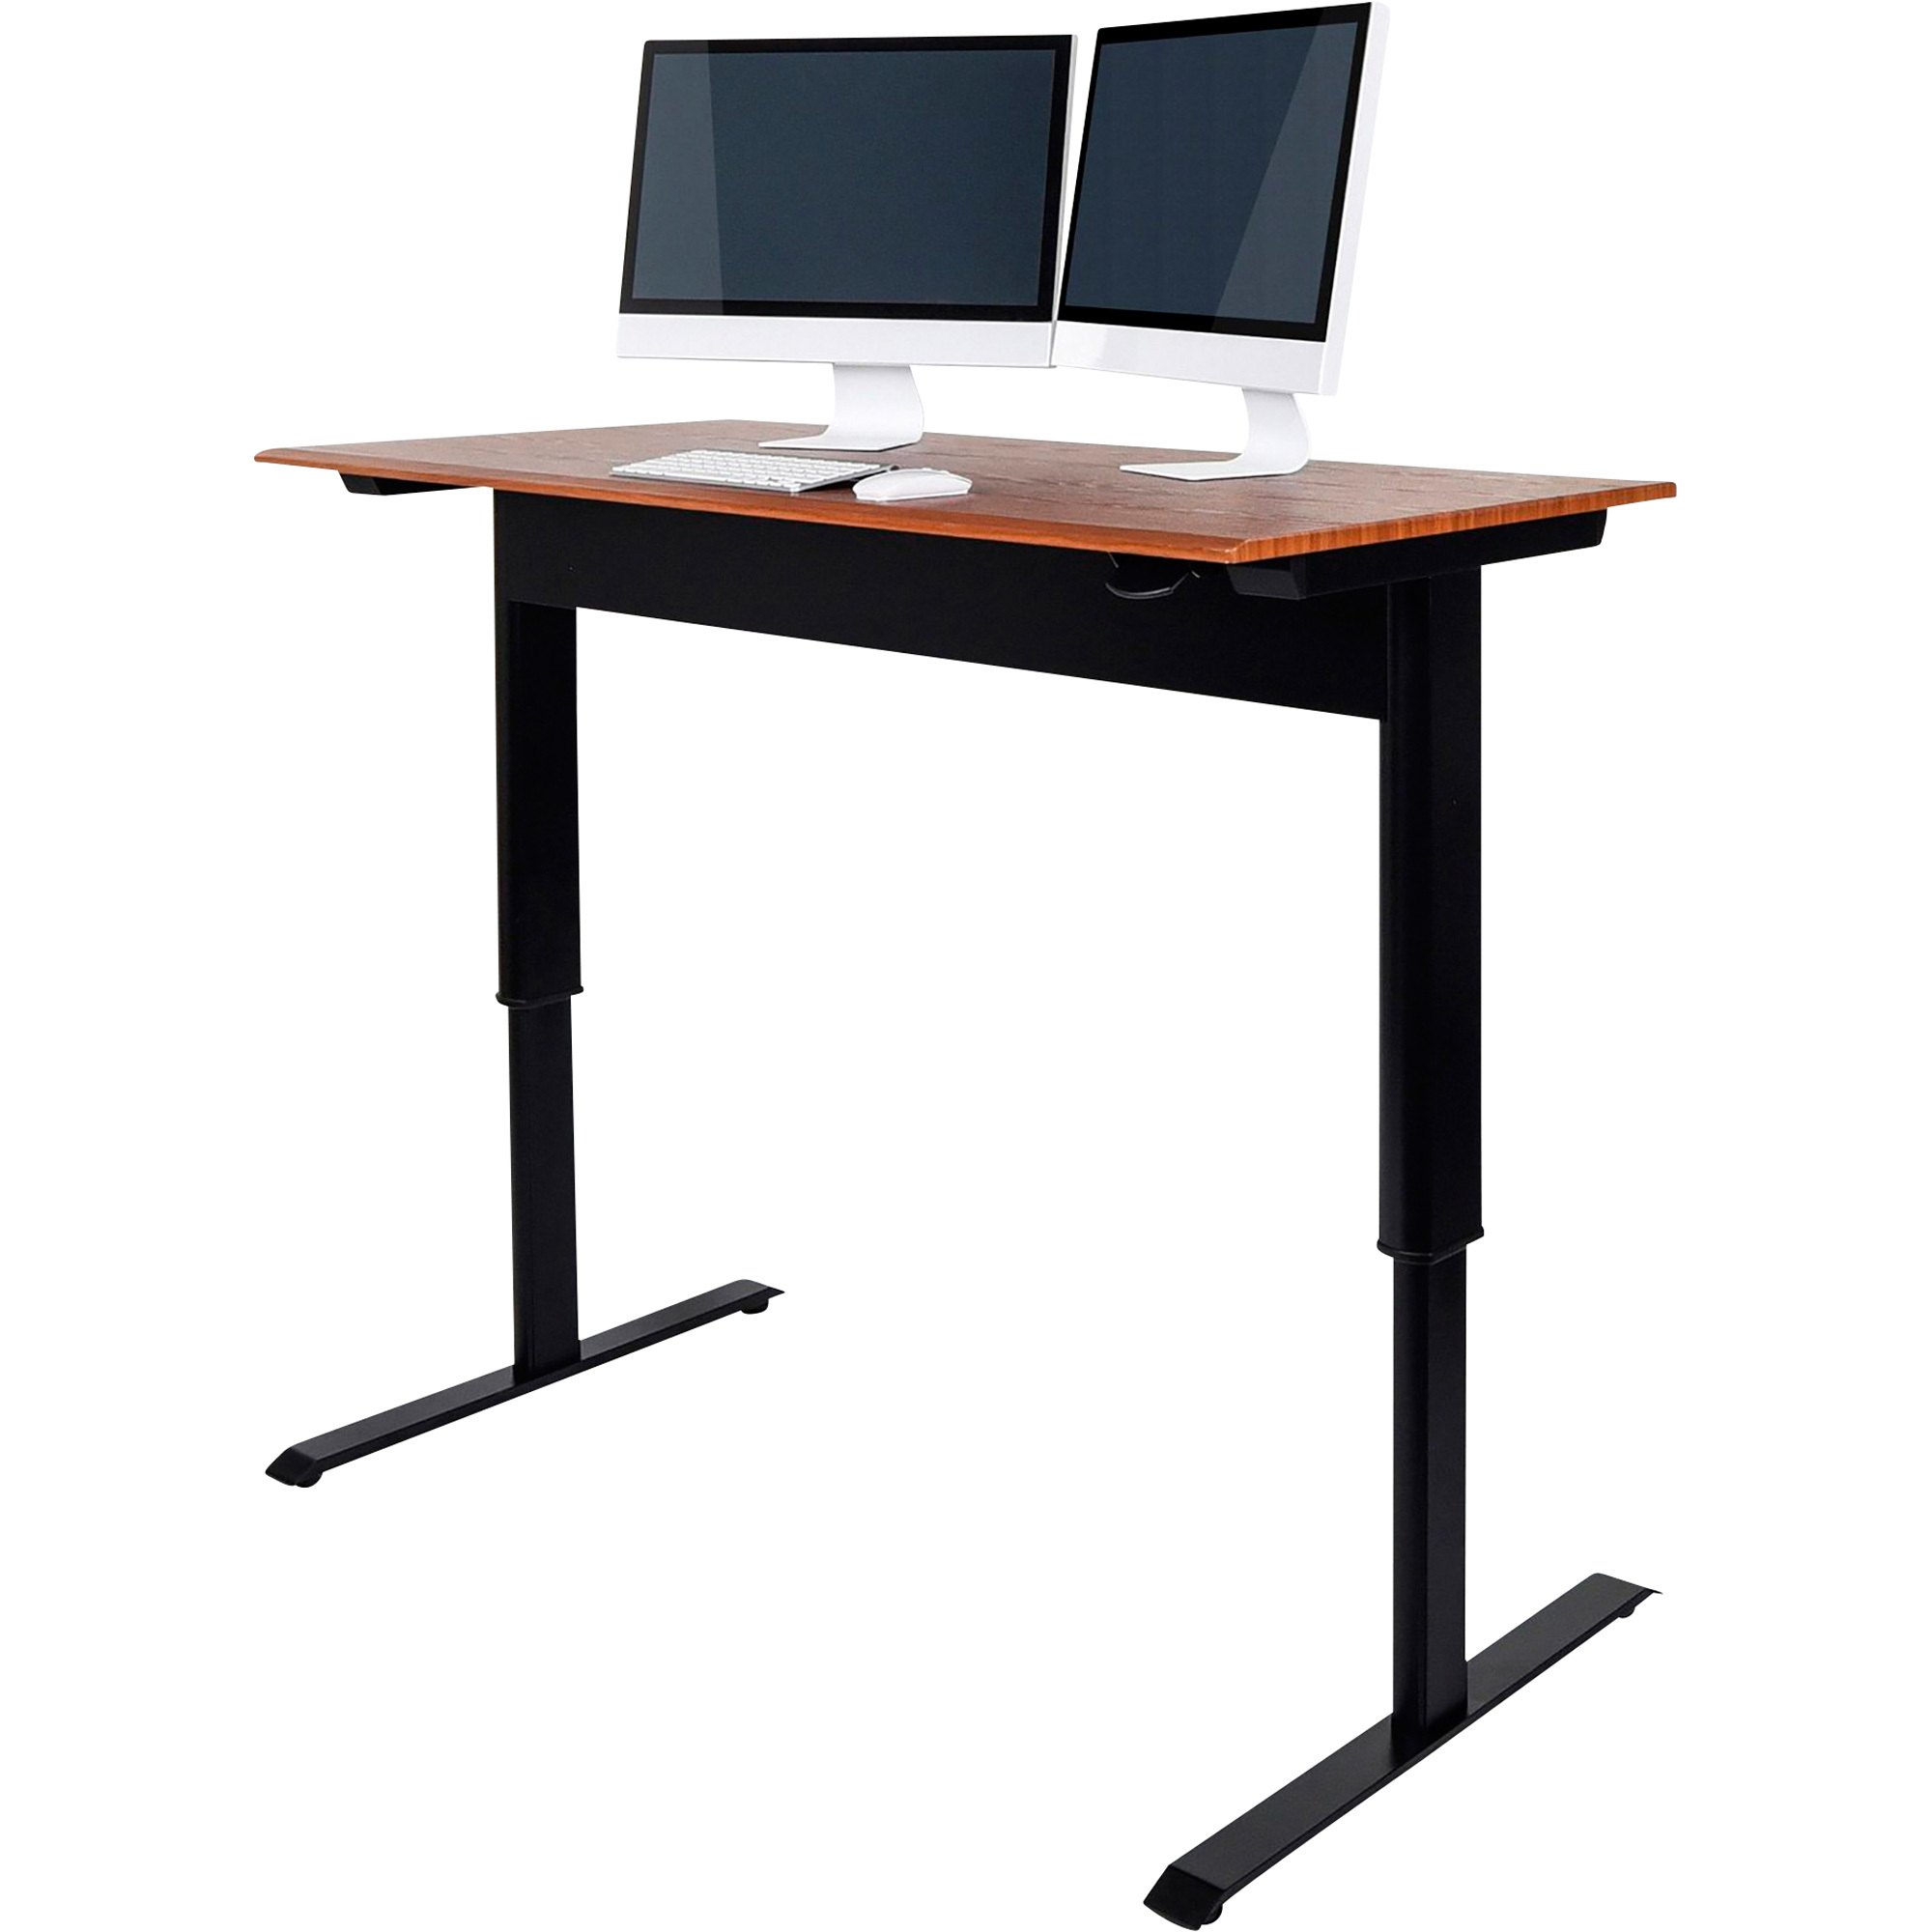 Pneumatic Adjustable Height Standing Desk — Black/Teak, 56Inch W x 29.5Inch D x 27.5–44.5Inch H, Model - Luxor SPN56F-BK/TK